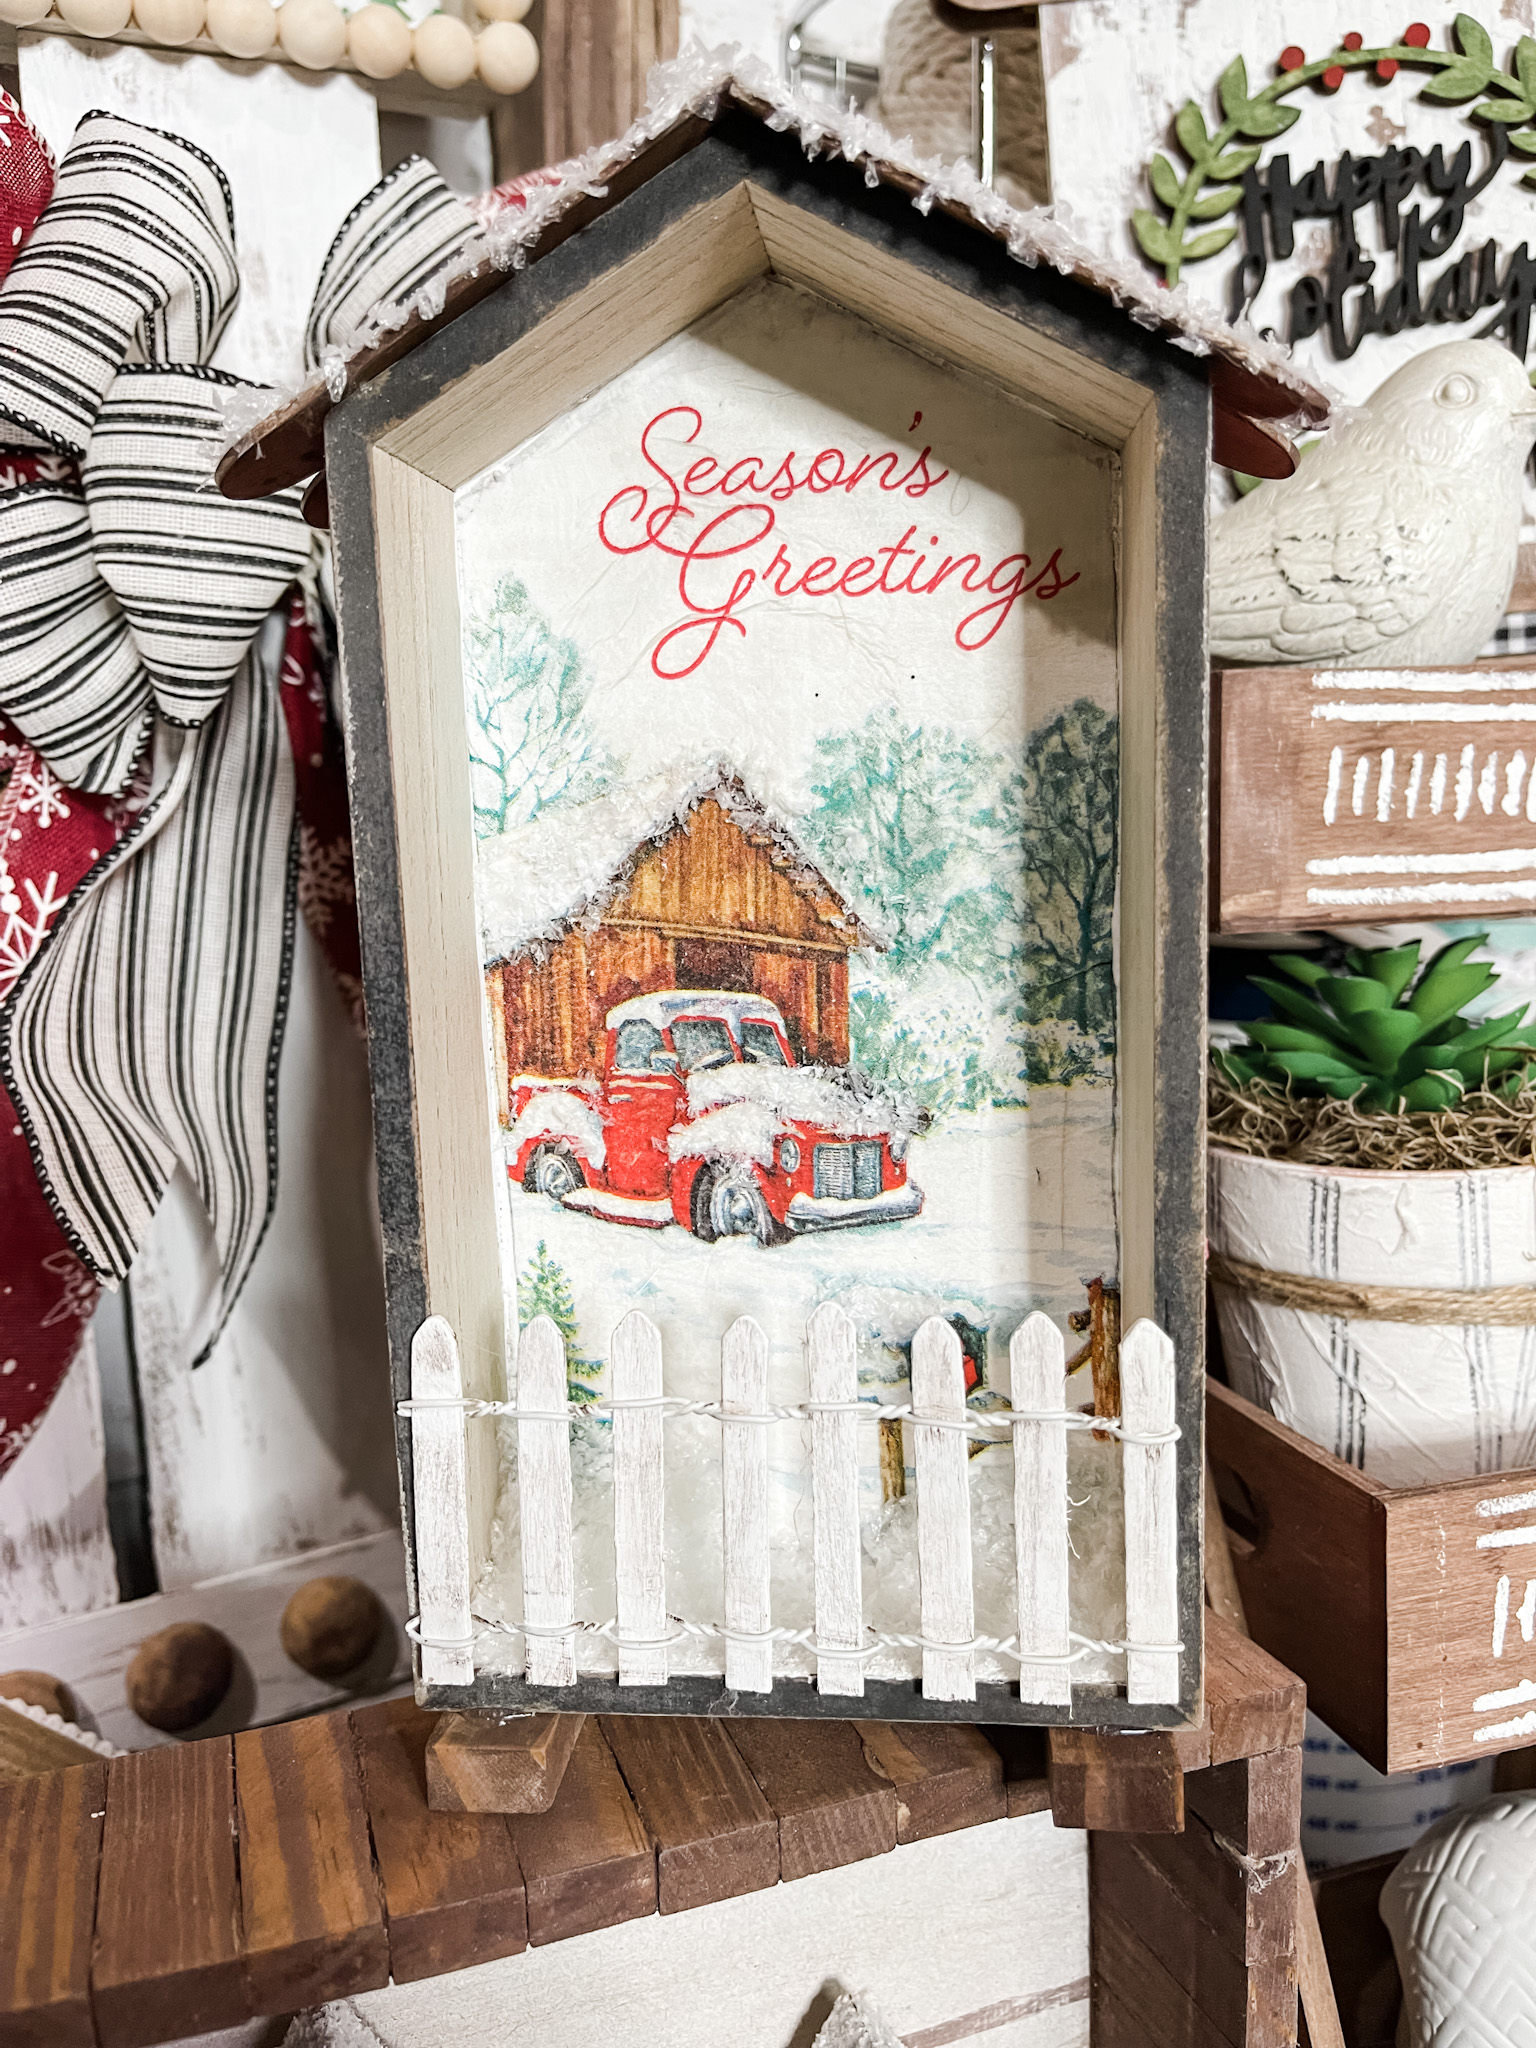 DIY Season's Greetings Holiday Decor